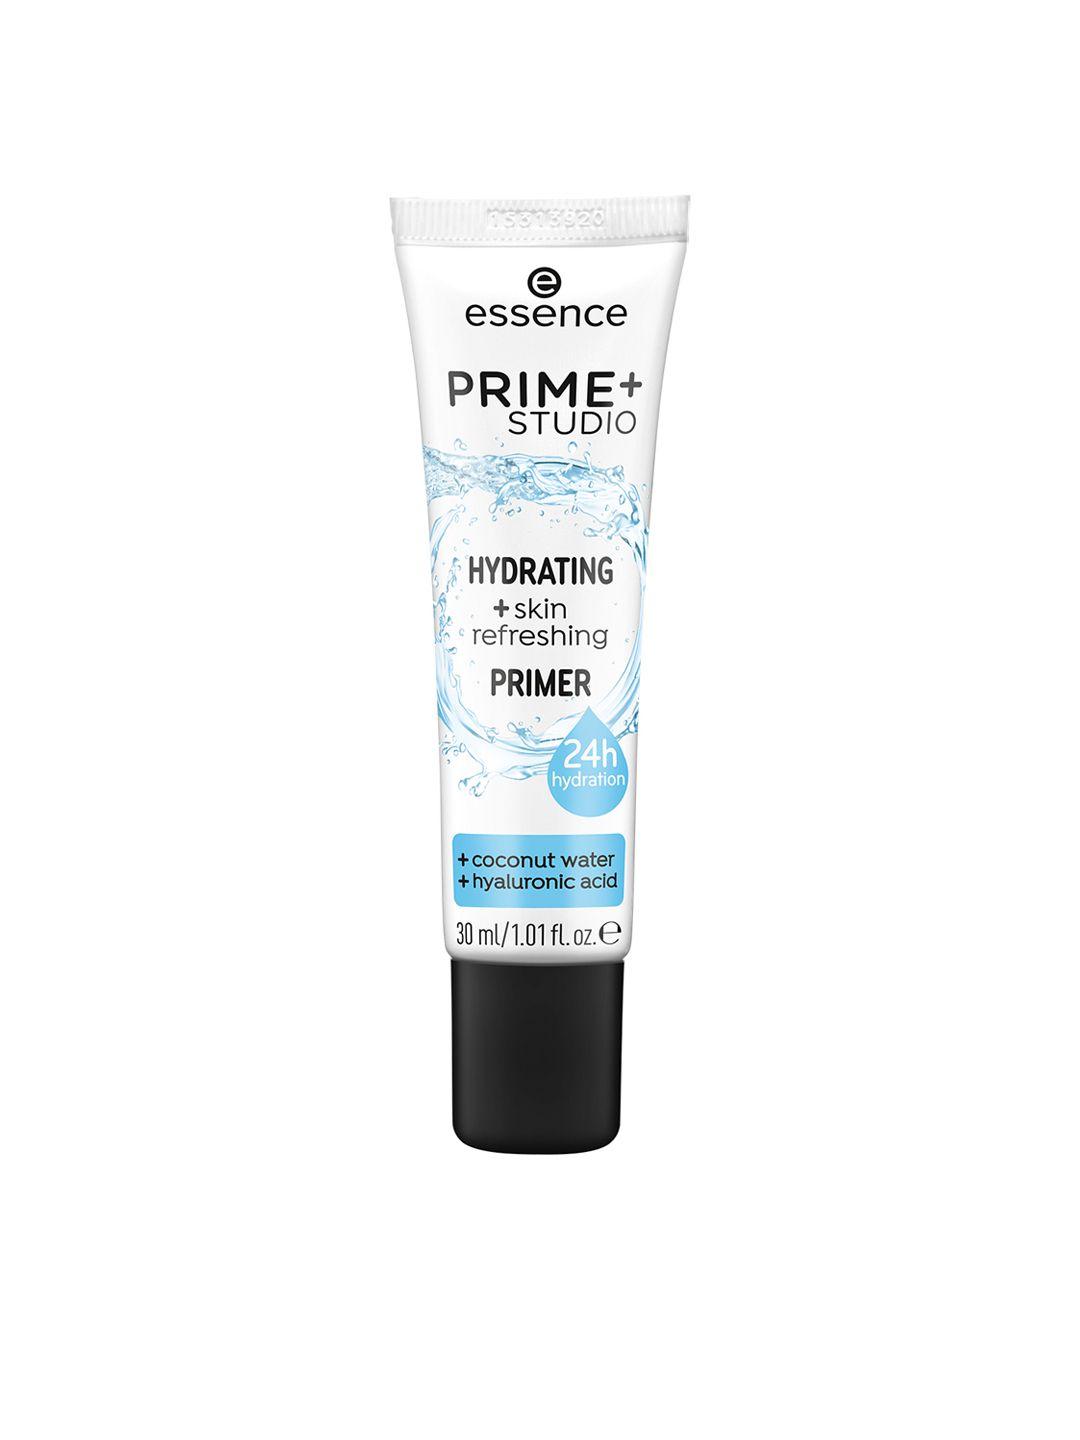 essence prime+ studio hydrating +skin refreshing primer